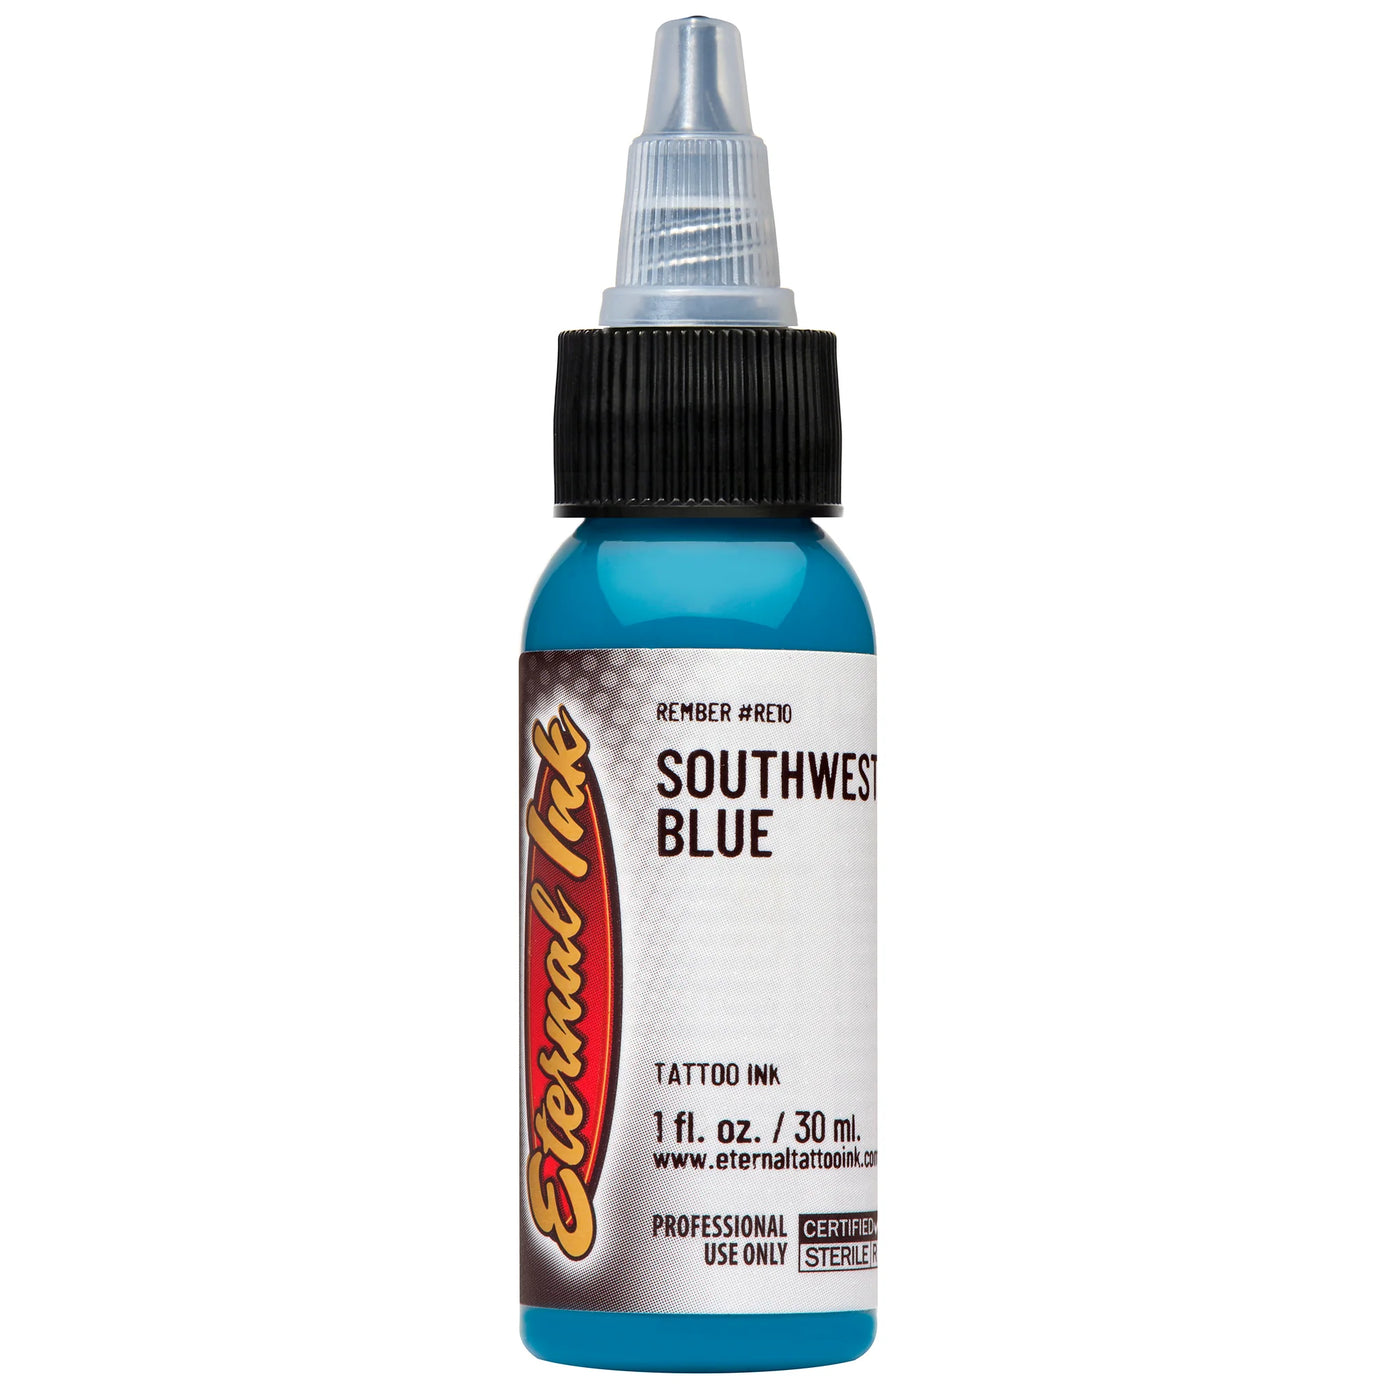 Southwest Blue - Eternal Ink Rember Series